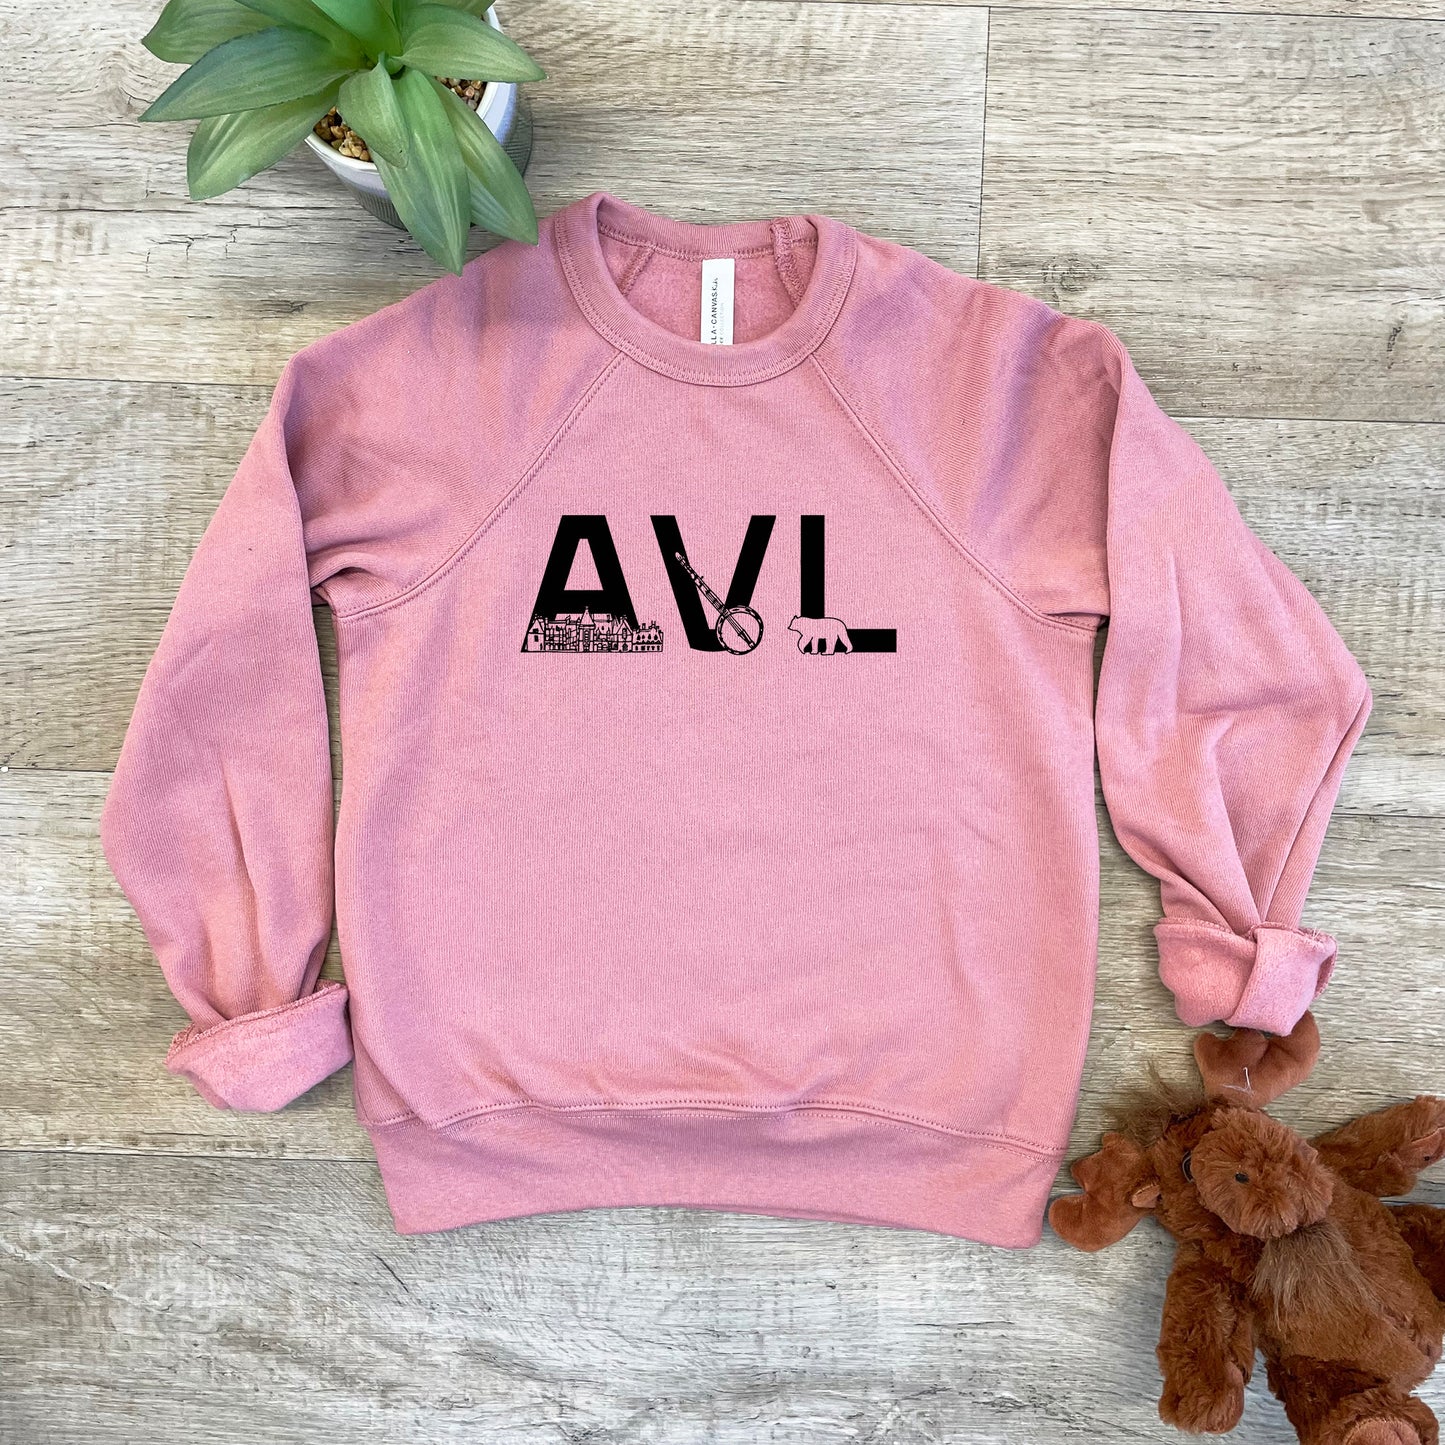 AVL (Asheville) - Kid's Sweatshirt - Heather Gray or Mauve